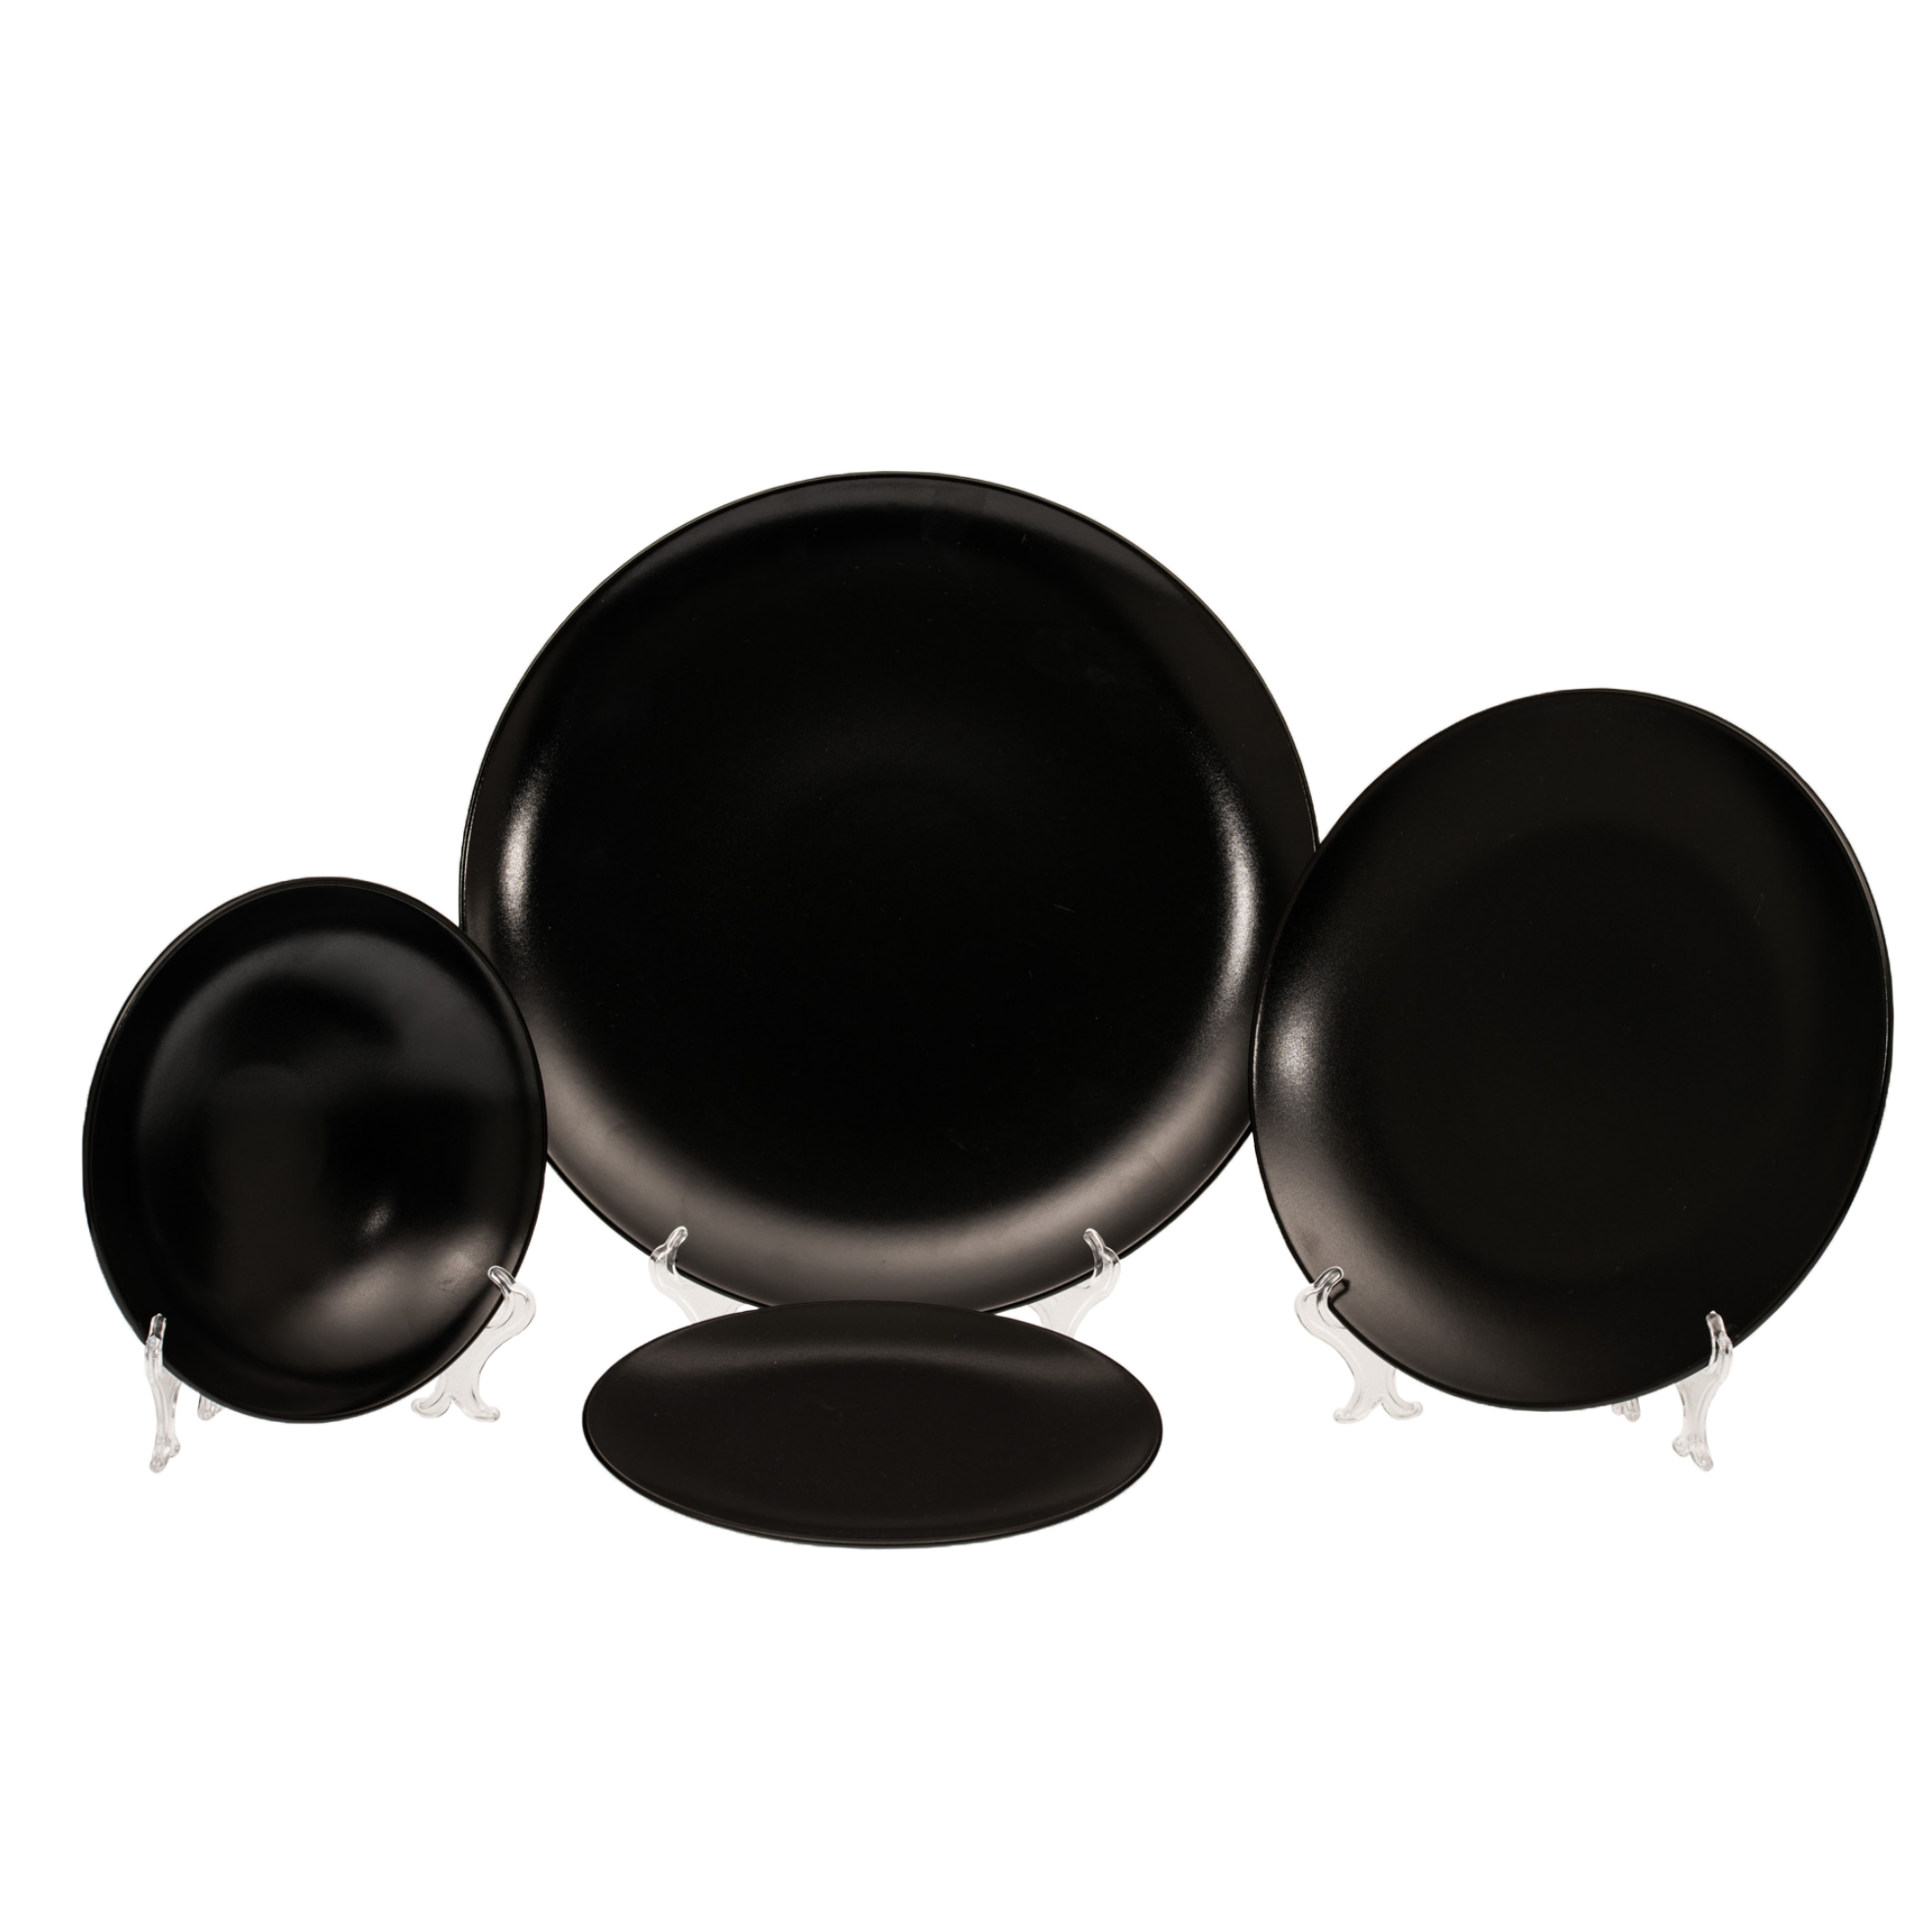 DINNER Plate Black Monaco cm 26 (31 each container)